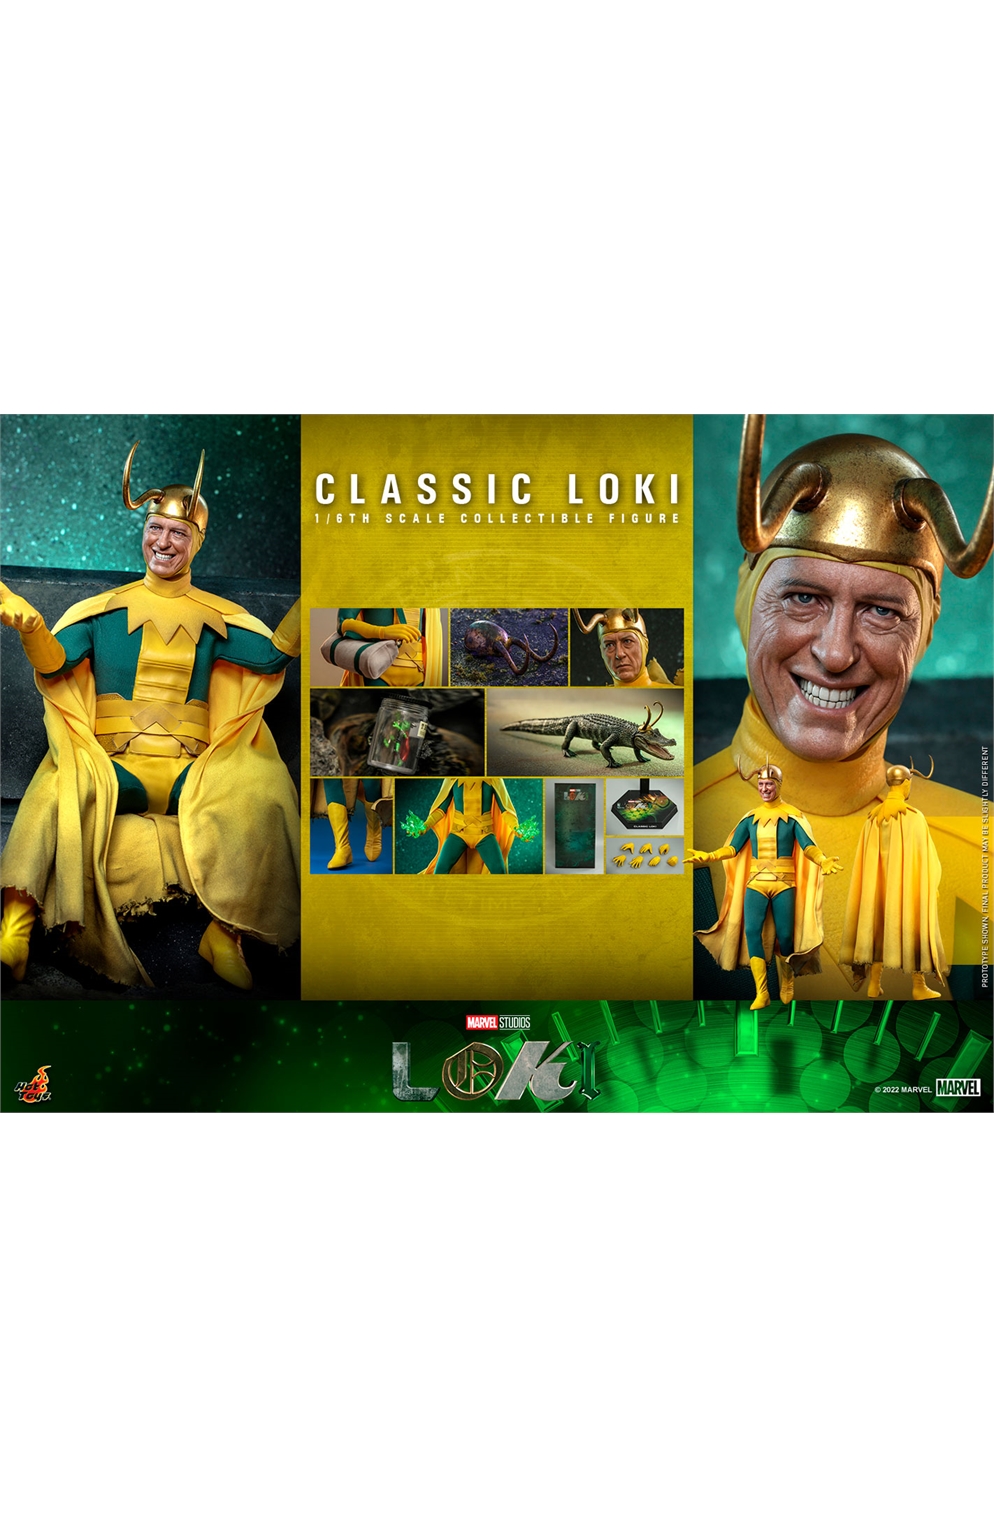 Classic Loki Hot Toys Sixth Scale Figure